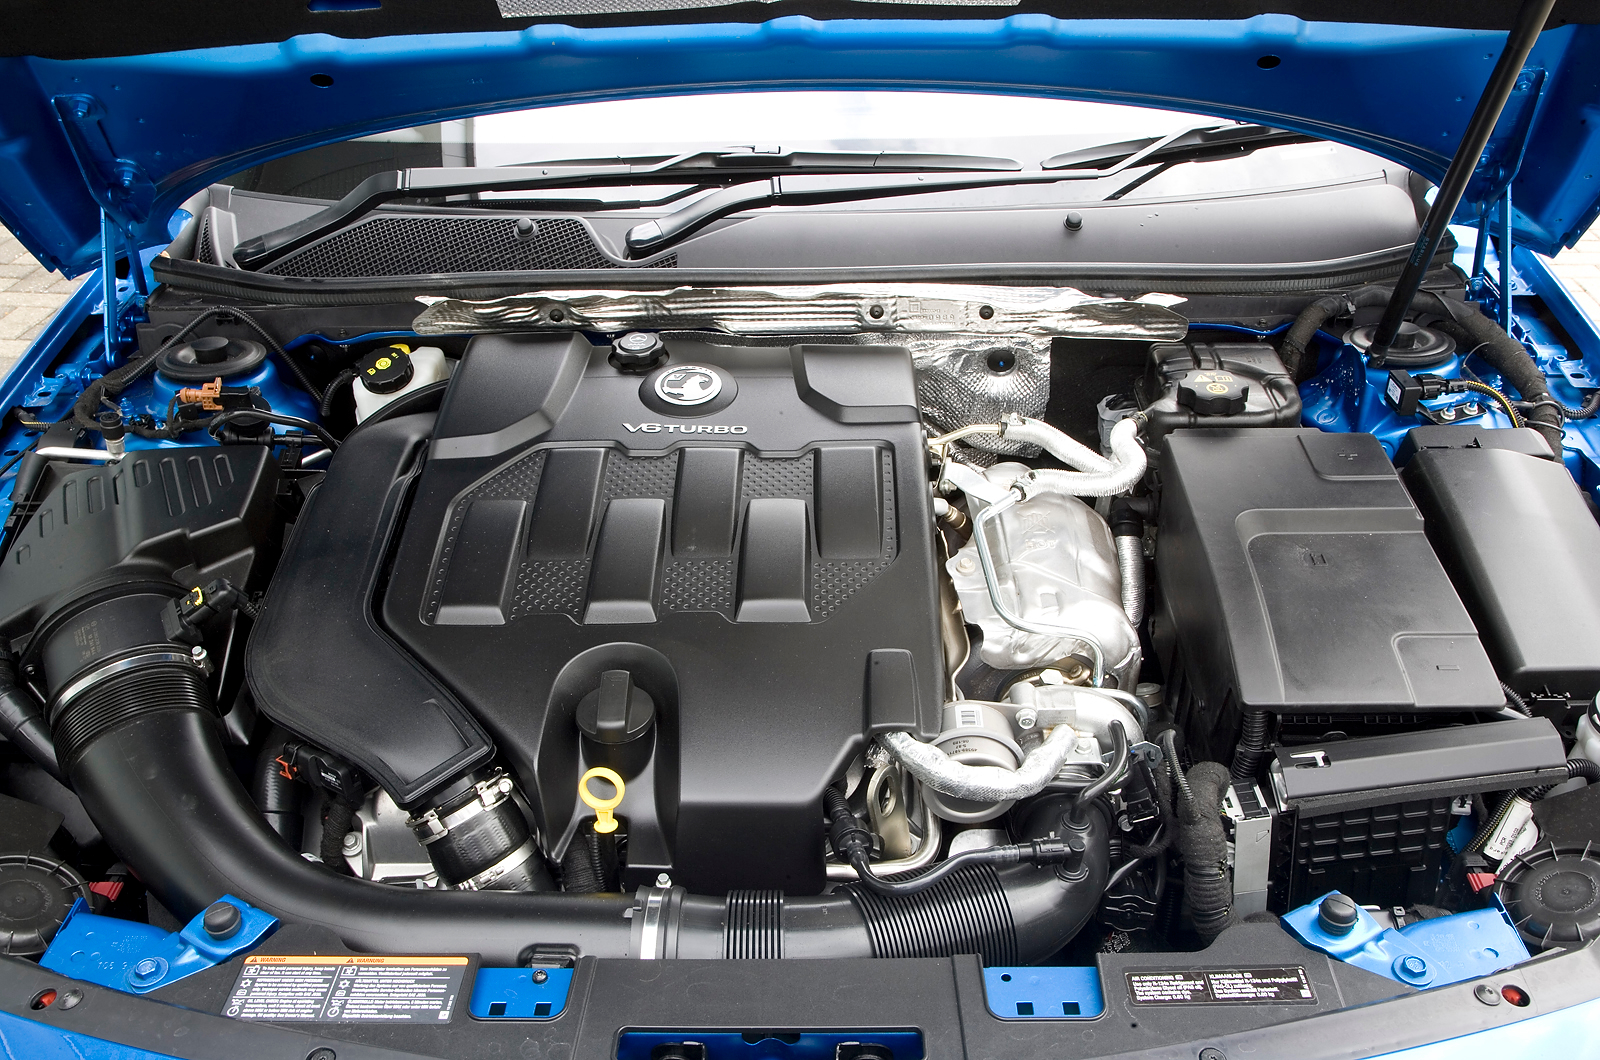 2.0-litre Vauxhall Insignia VXR engine